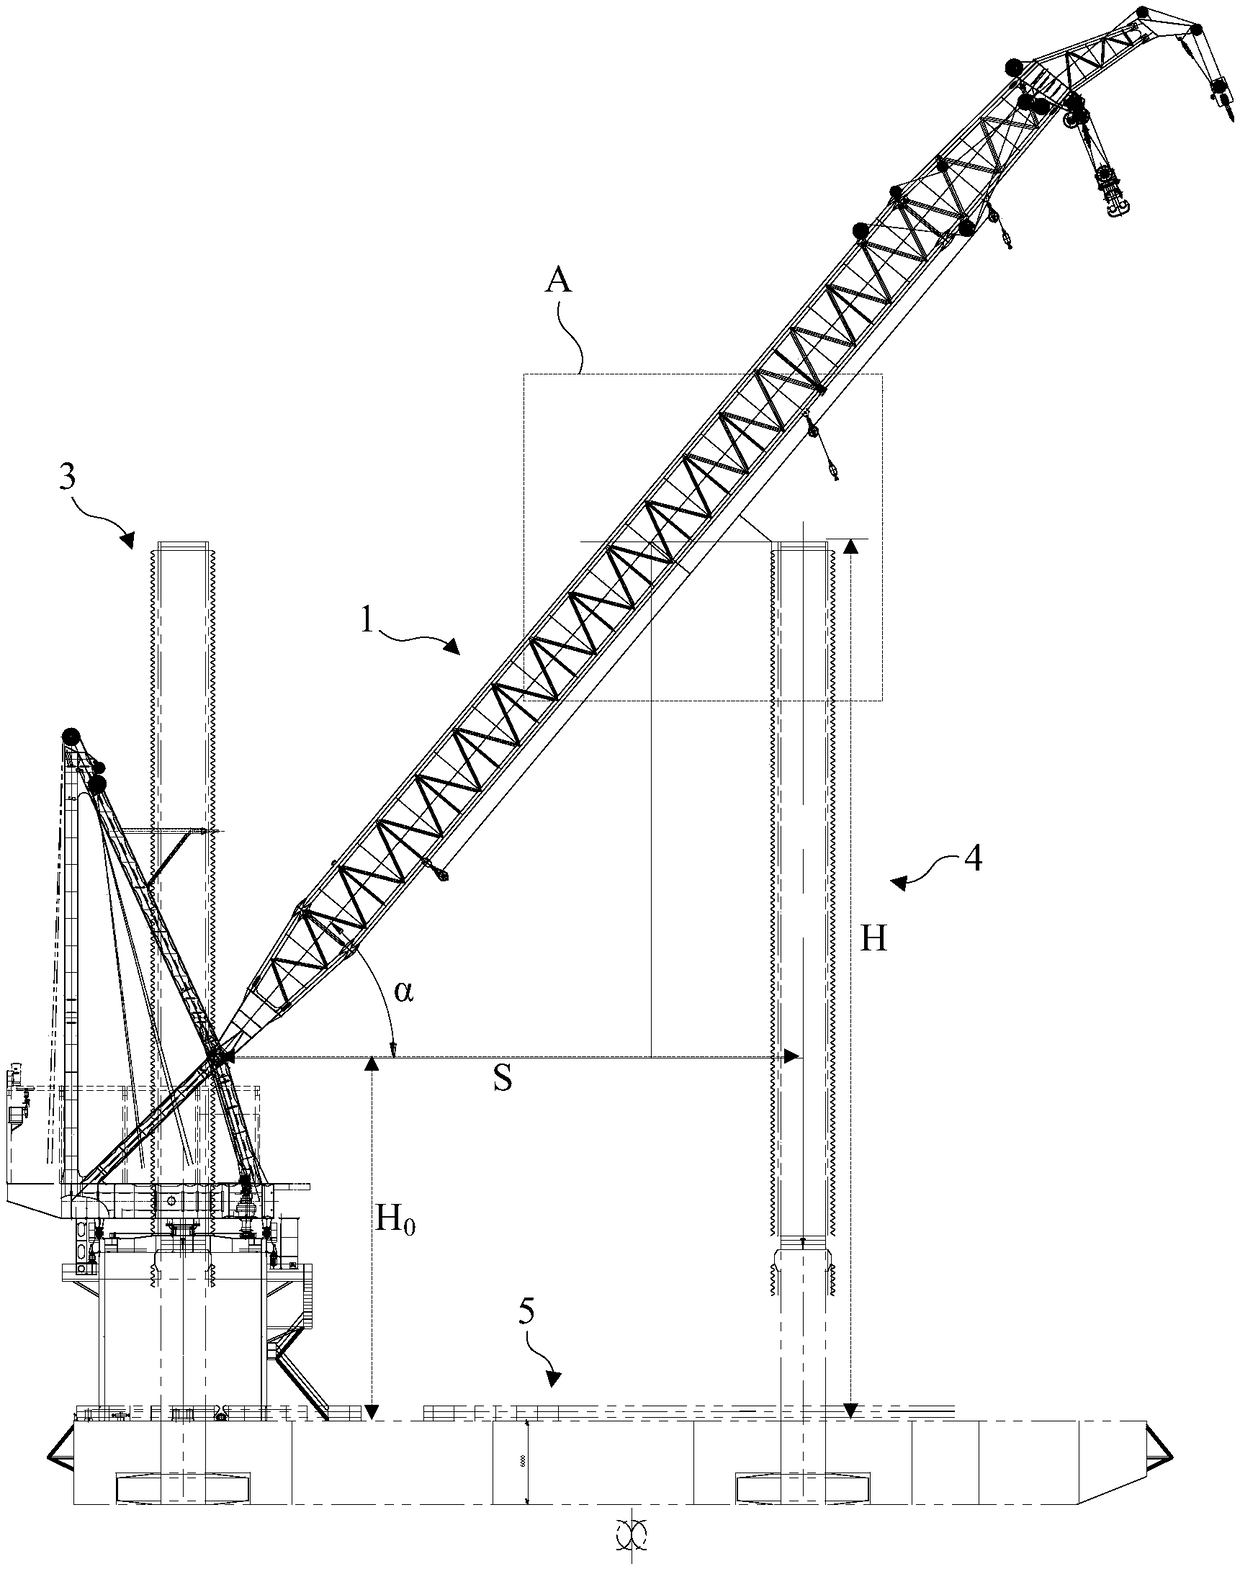 Platform crane collision prevention system and method